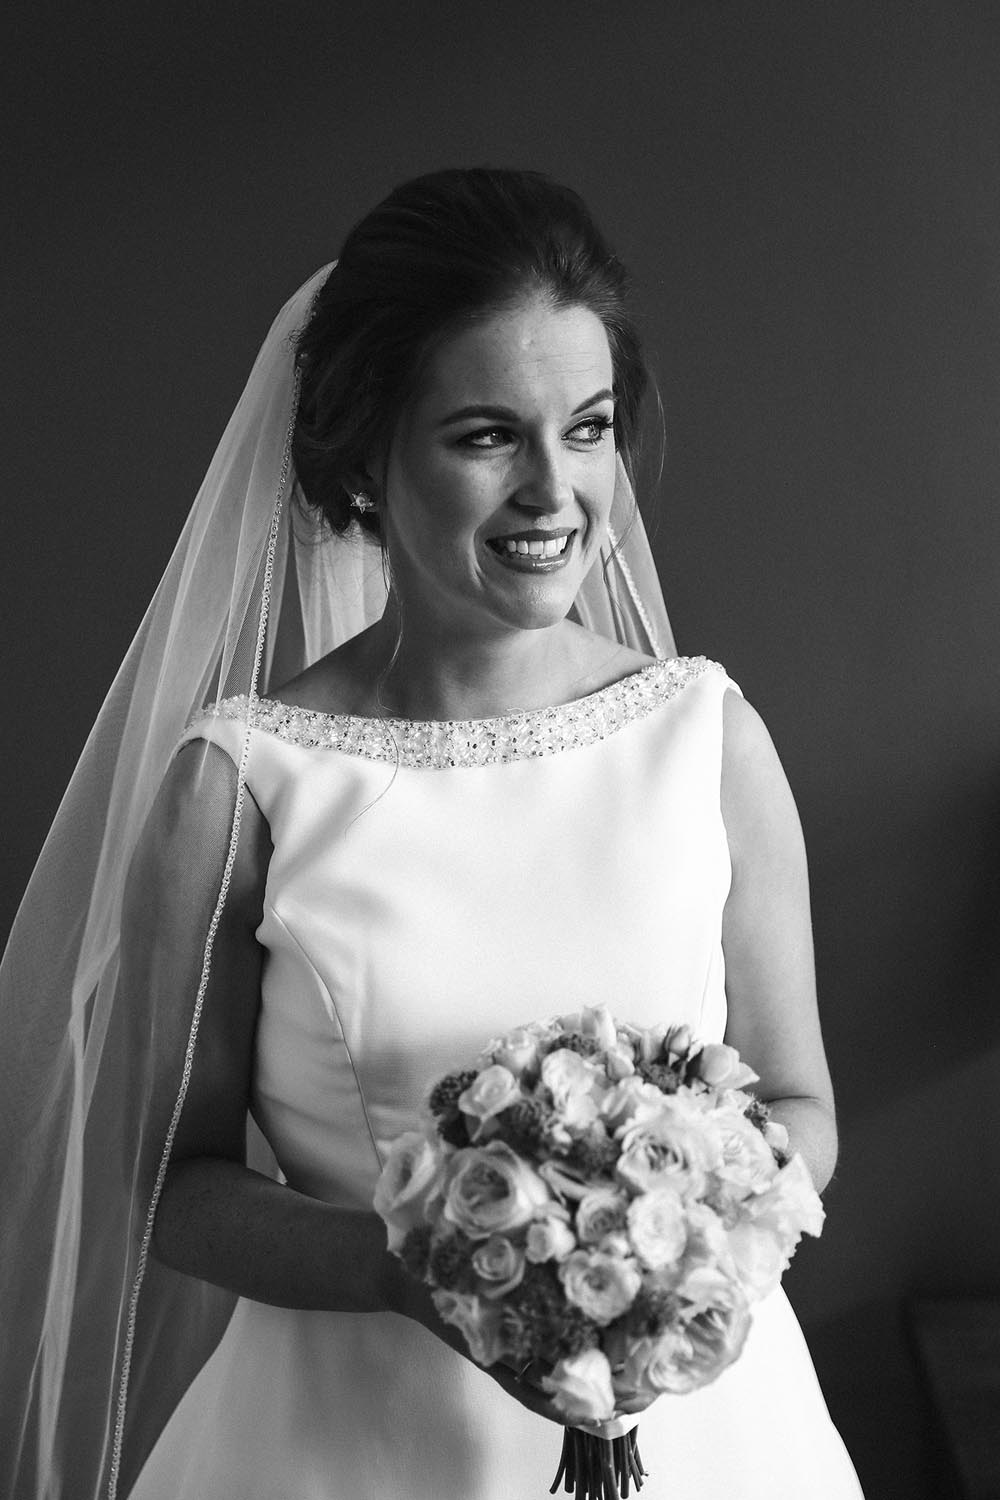 Black and white portrait of a bride